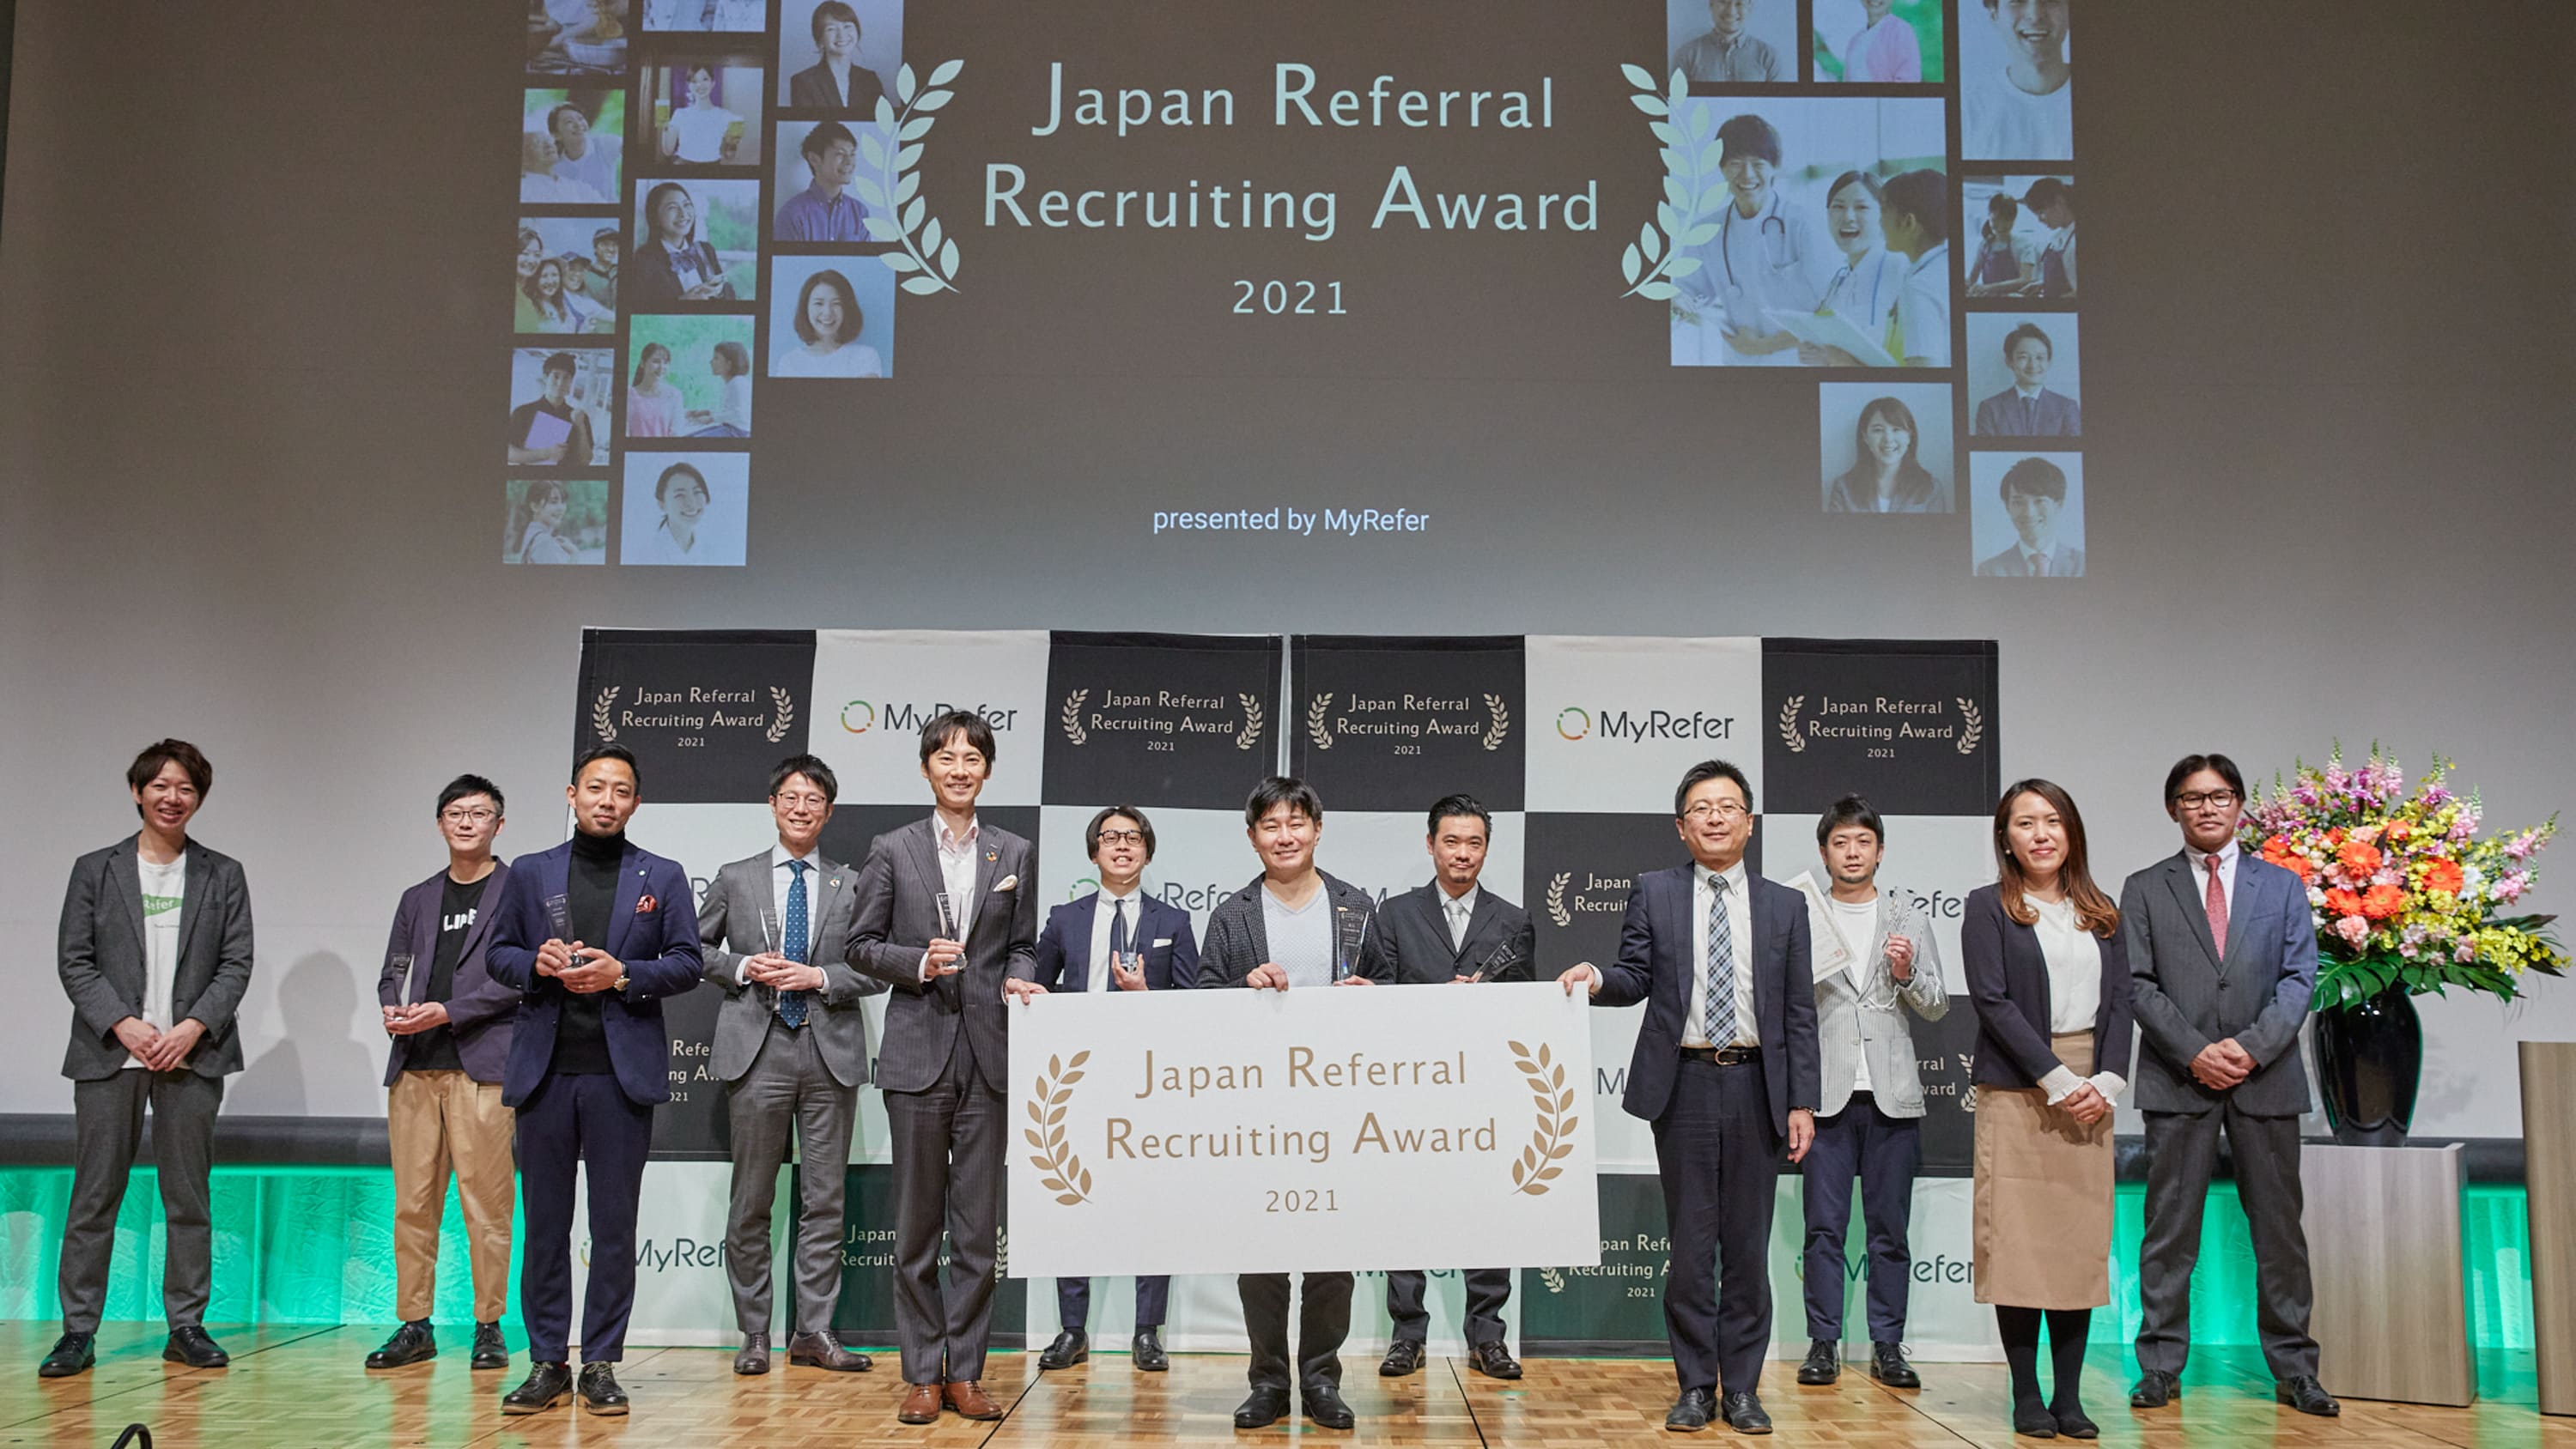 Japan Referral Recruiting Award 2021